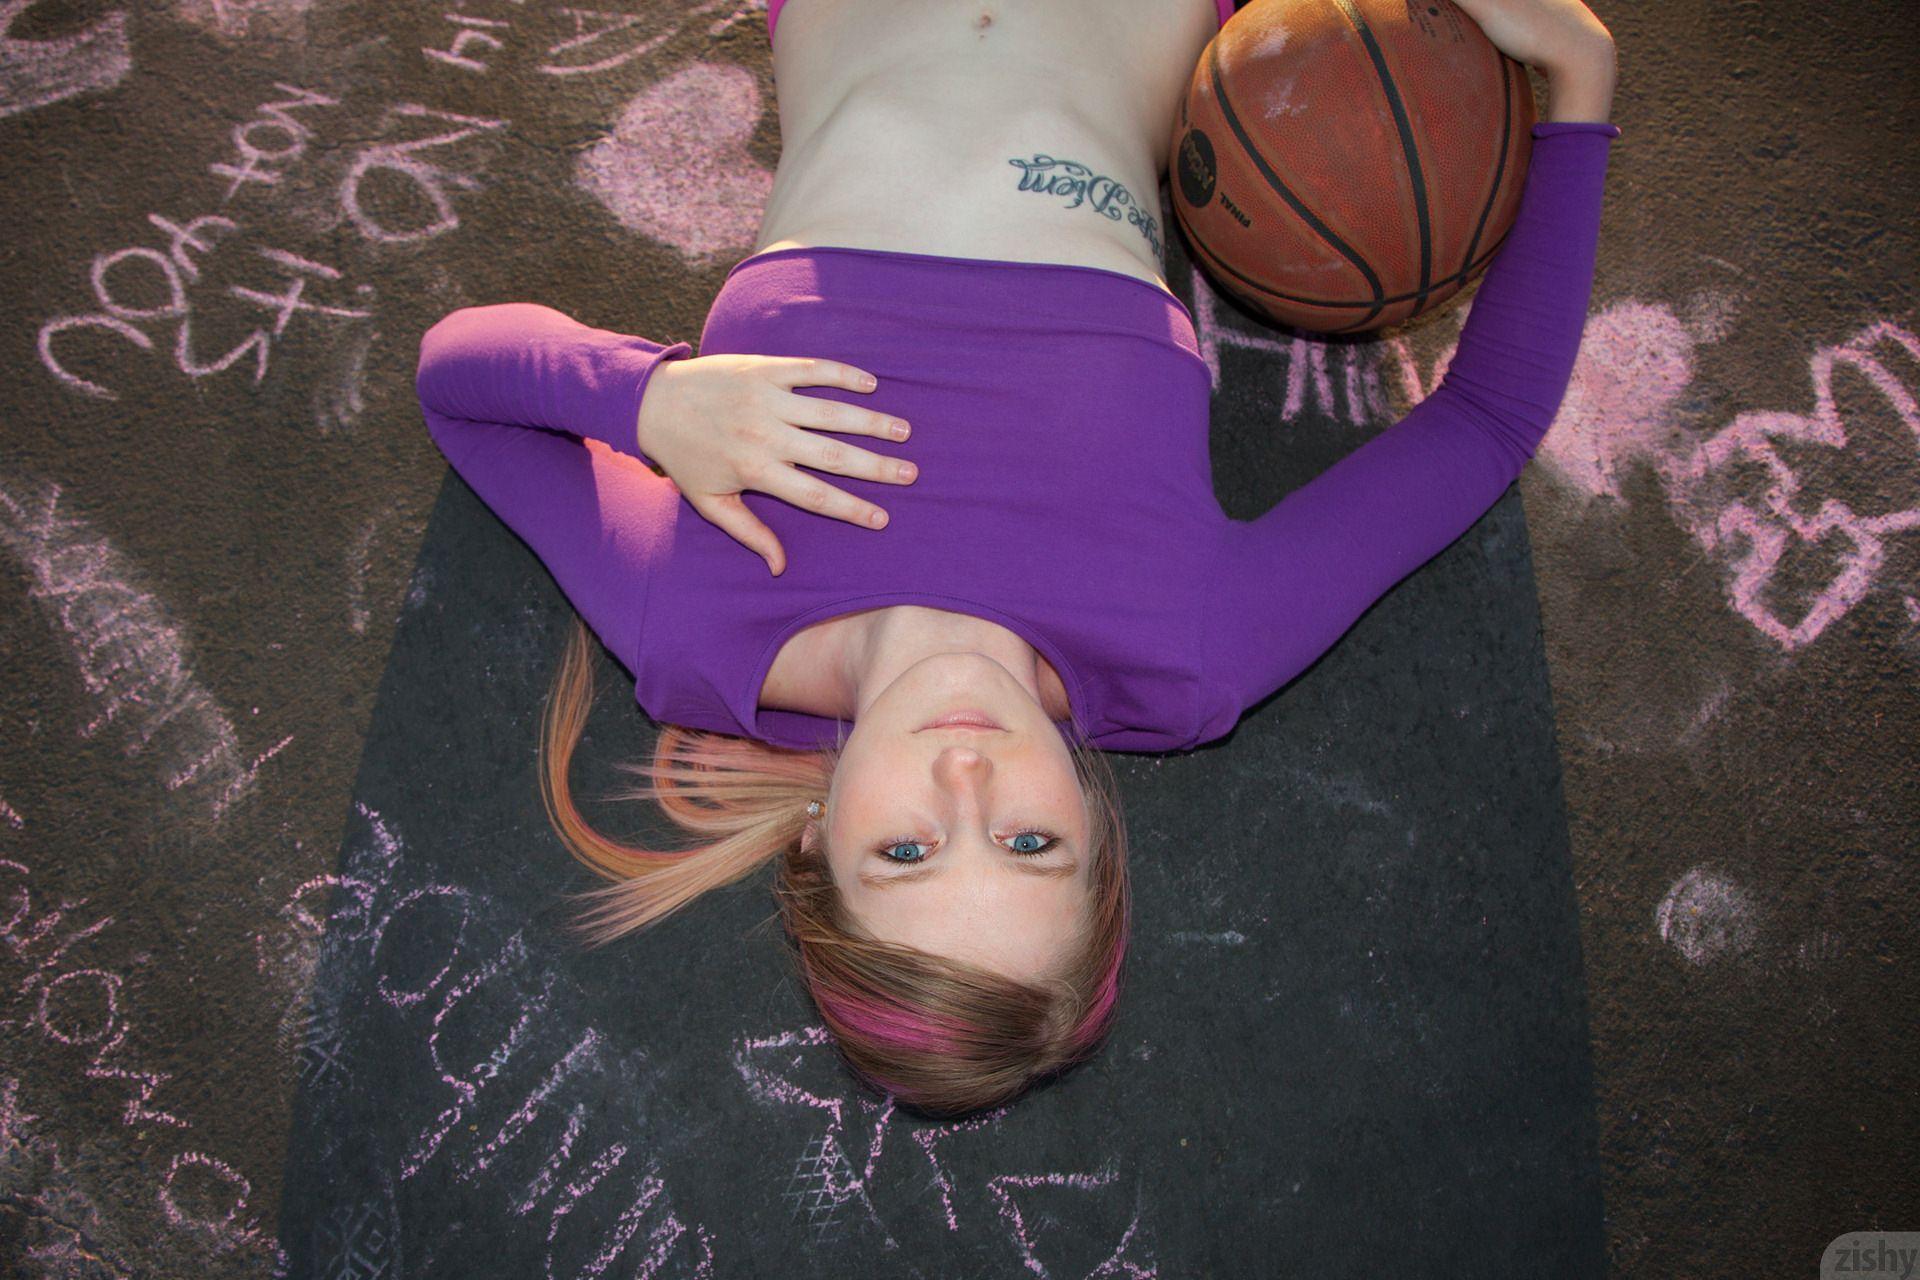 La blonde summer carter joue une partie sexy de basket-ball.
 #60017655